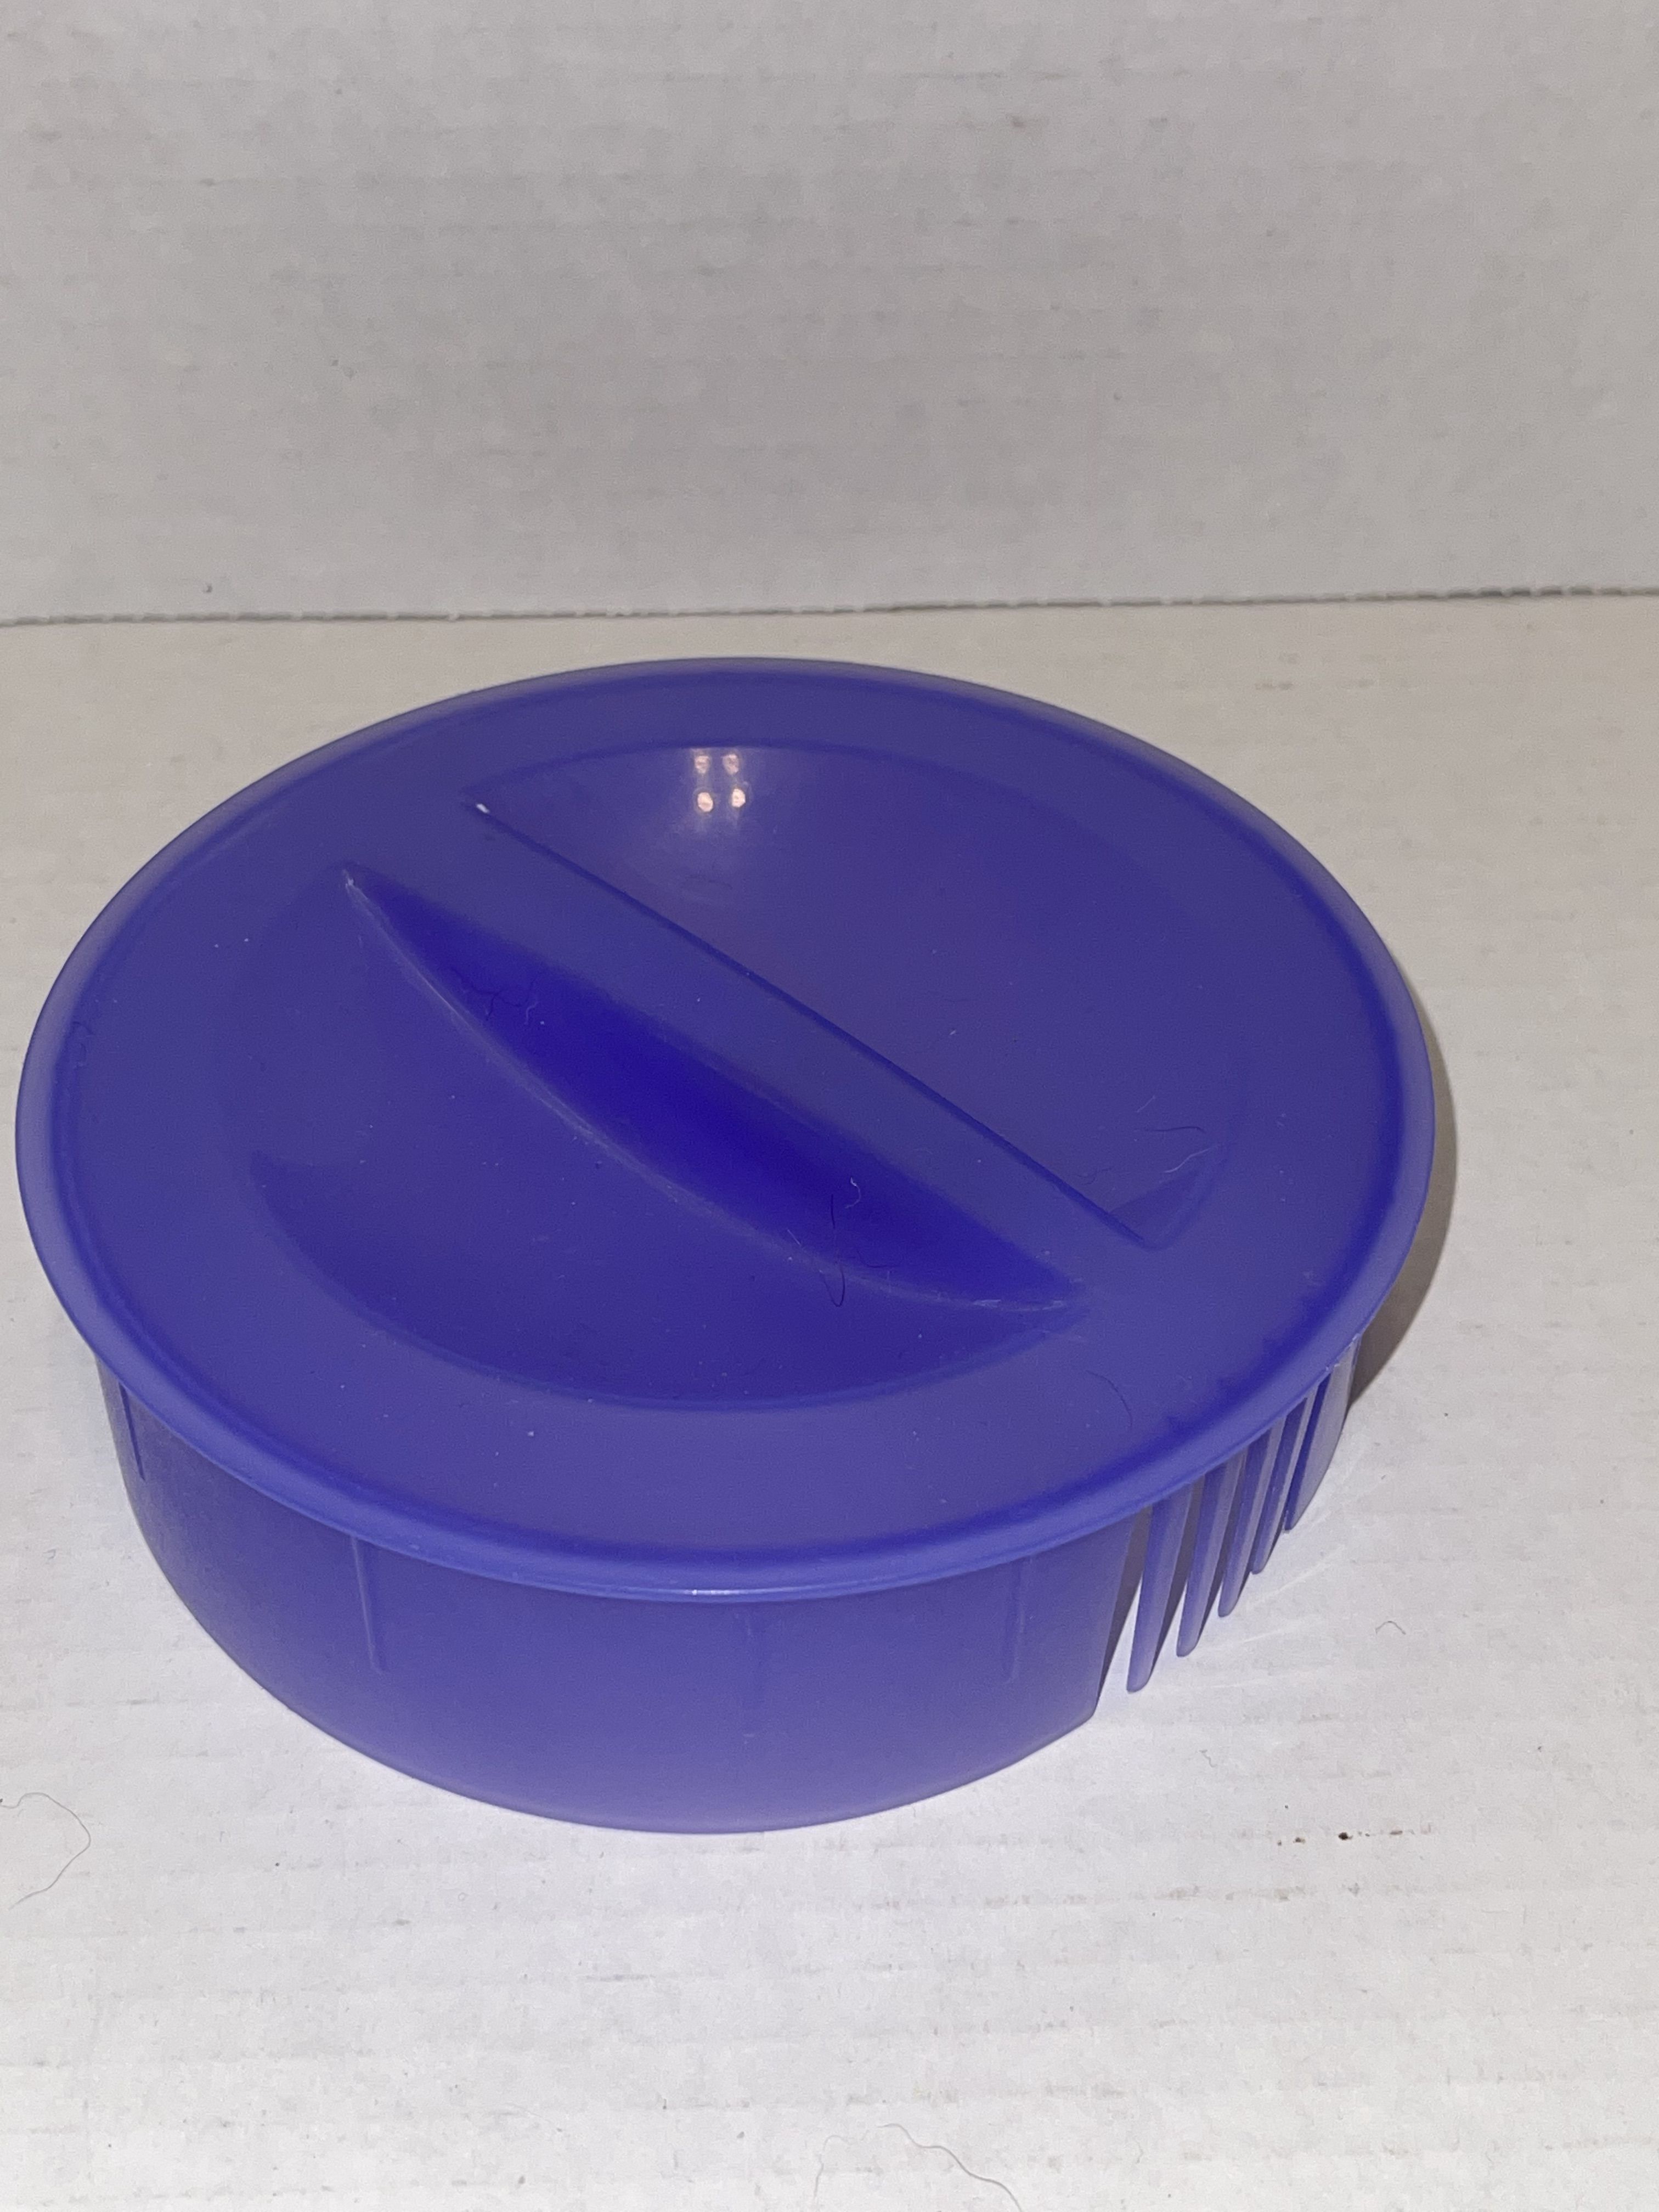 Mr Coffee Iced Tea Maker lilac / purple lid ONLY for 2 qt quart plastic pitcher